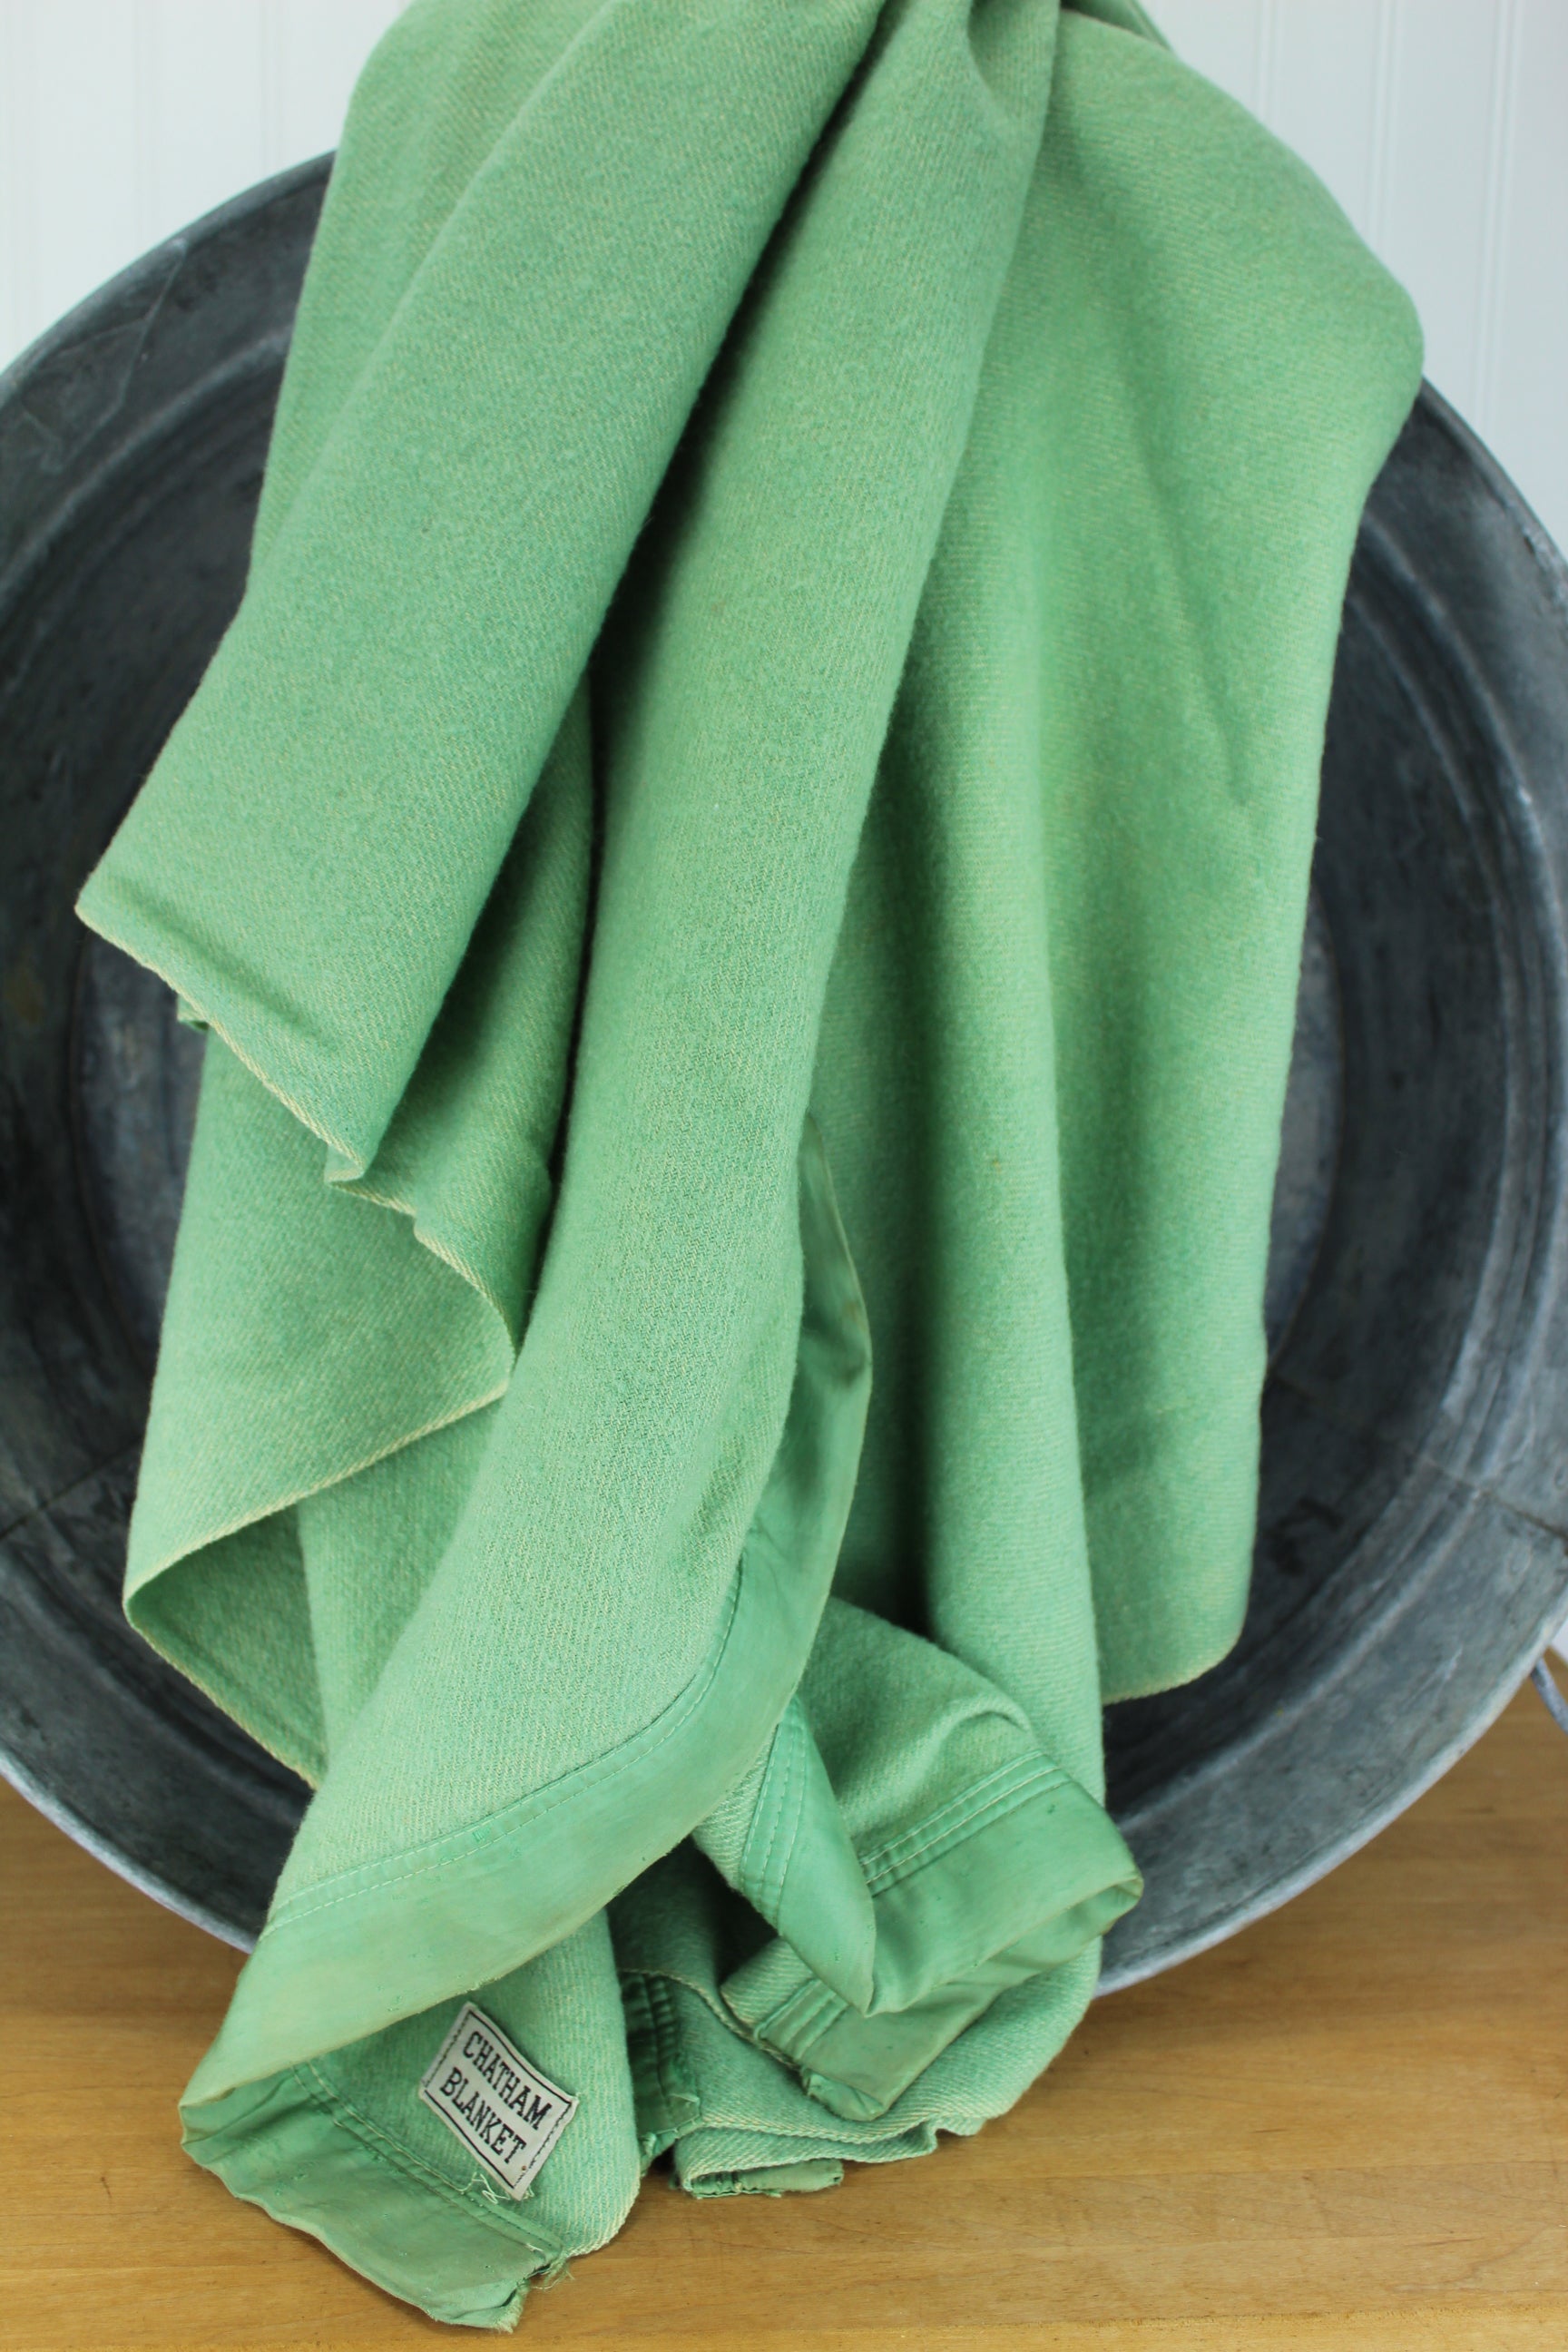 Chatham Wool Blanket - 1940s 50s - Green Soft Nice Weave - 66" X 79" spsring medium green